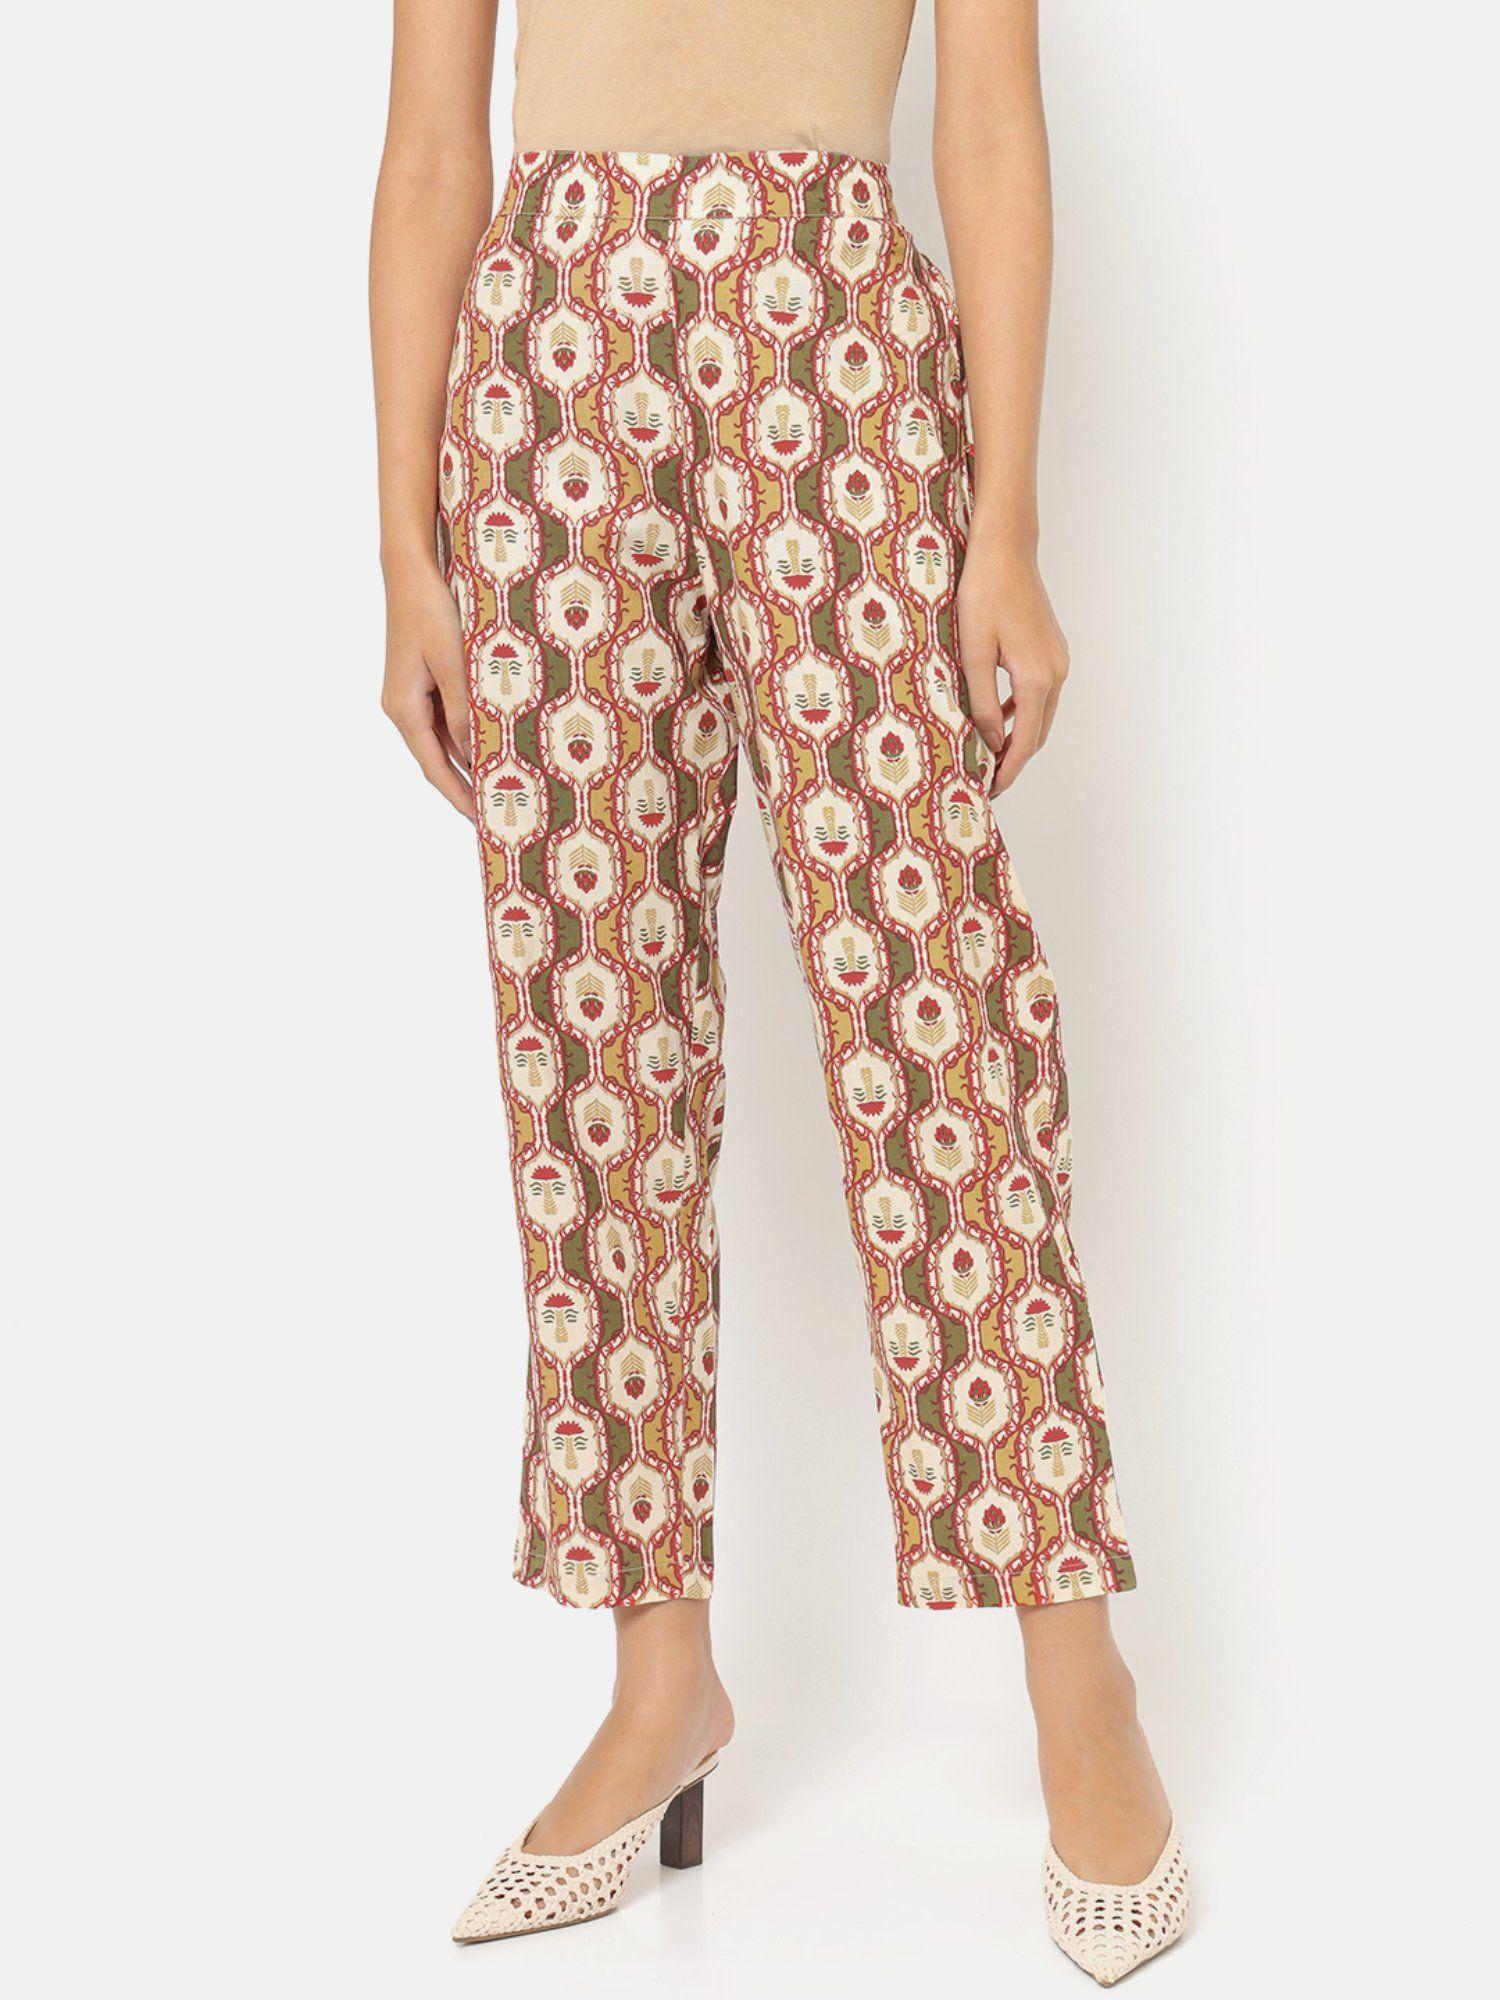 masakali-olive-floral-printed-pants